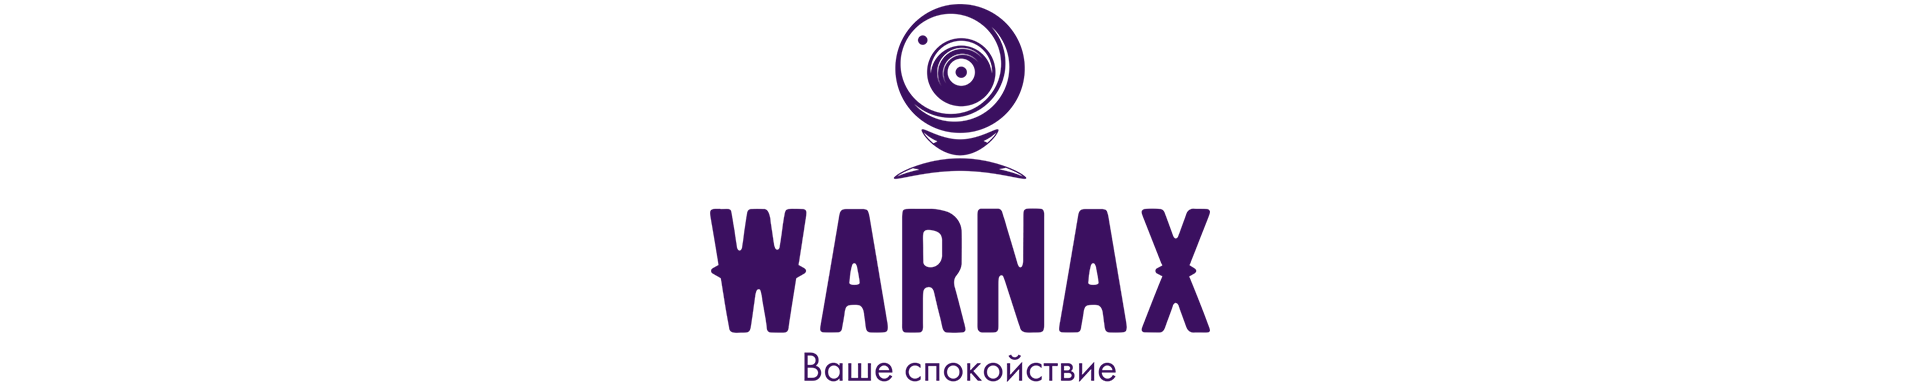 WARNAX